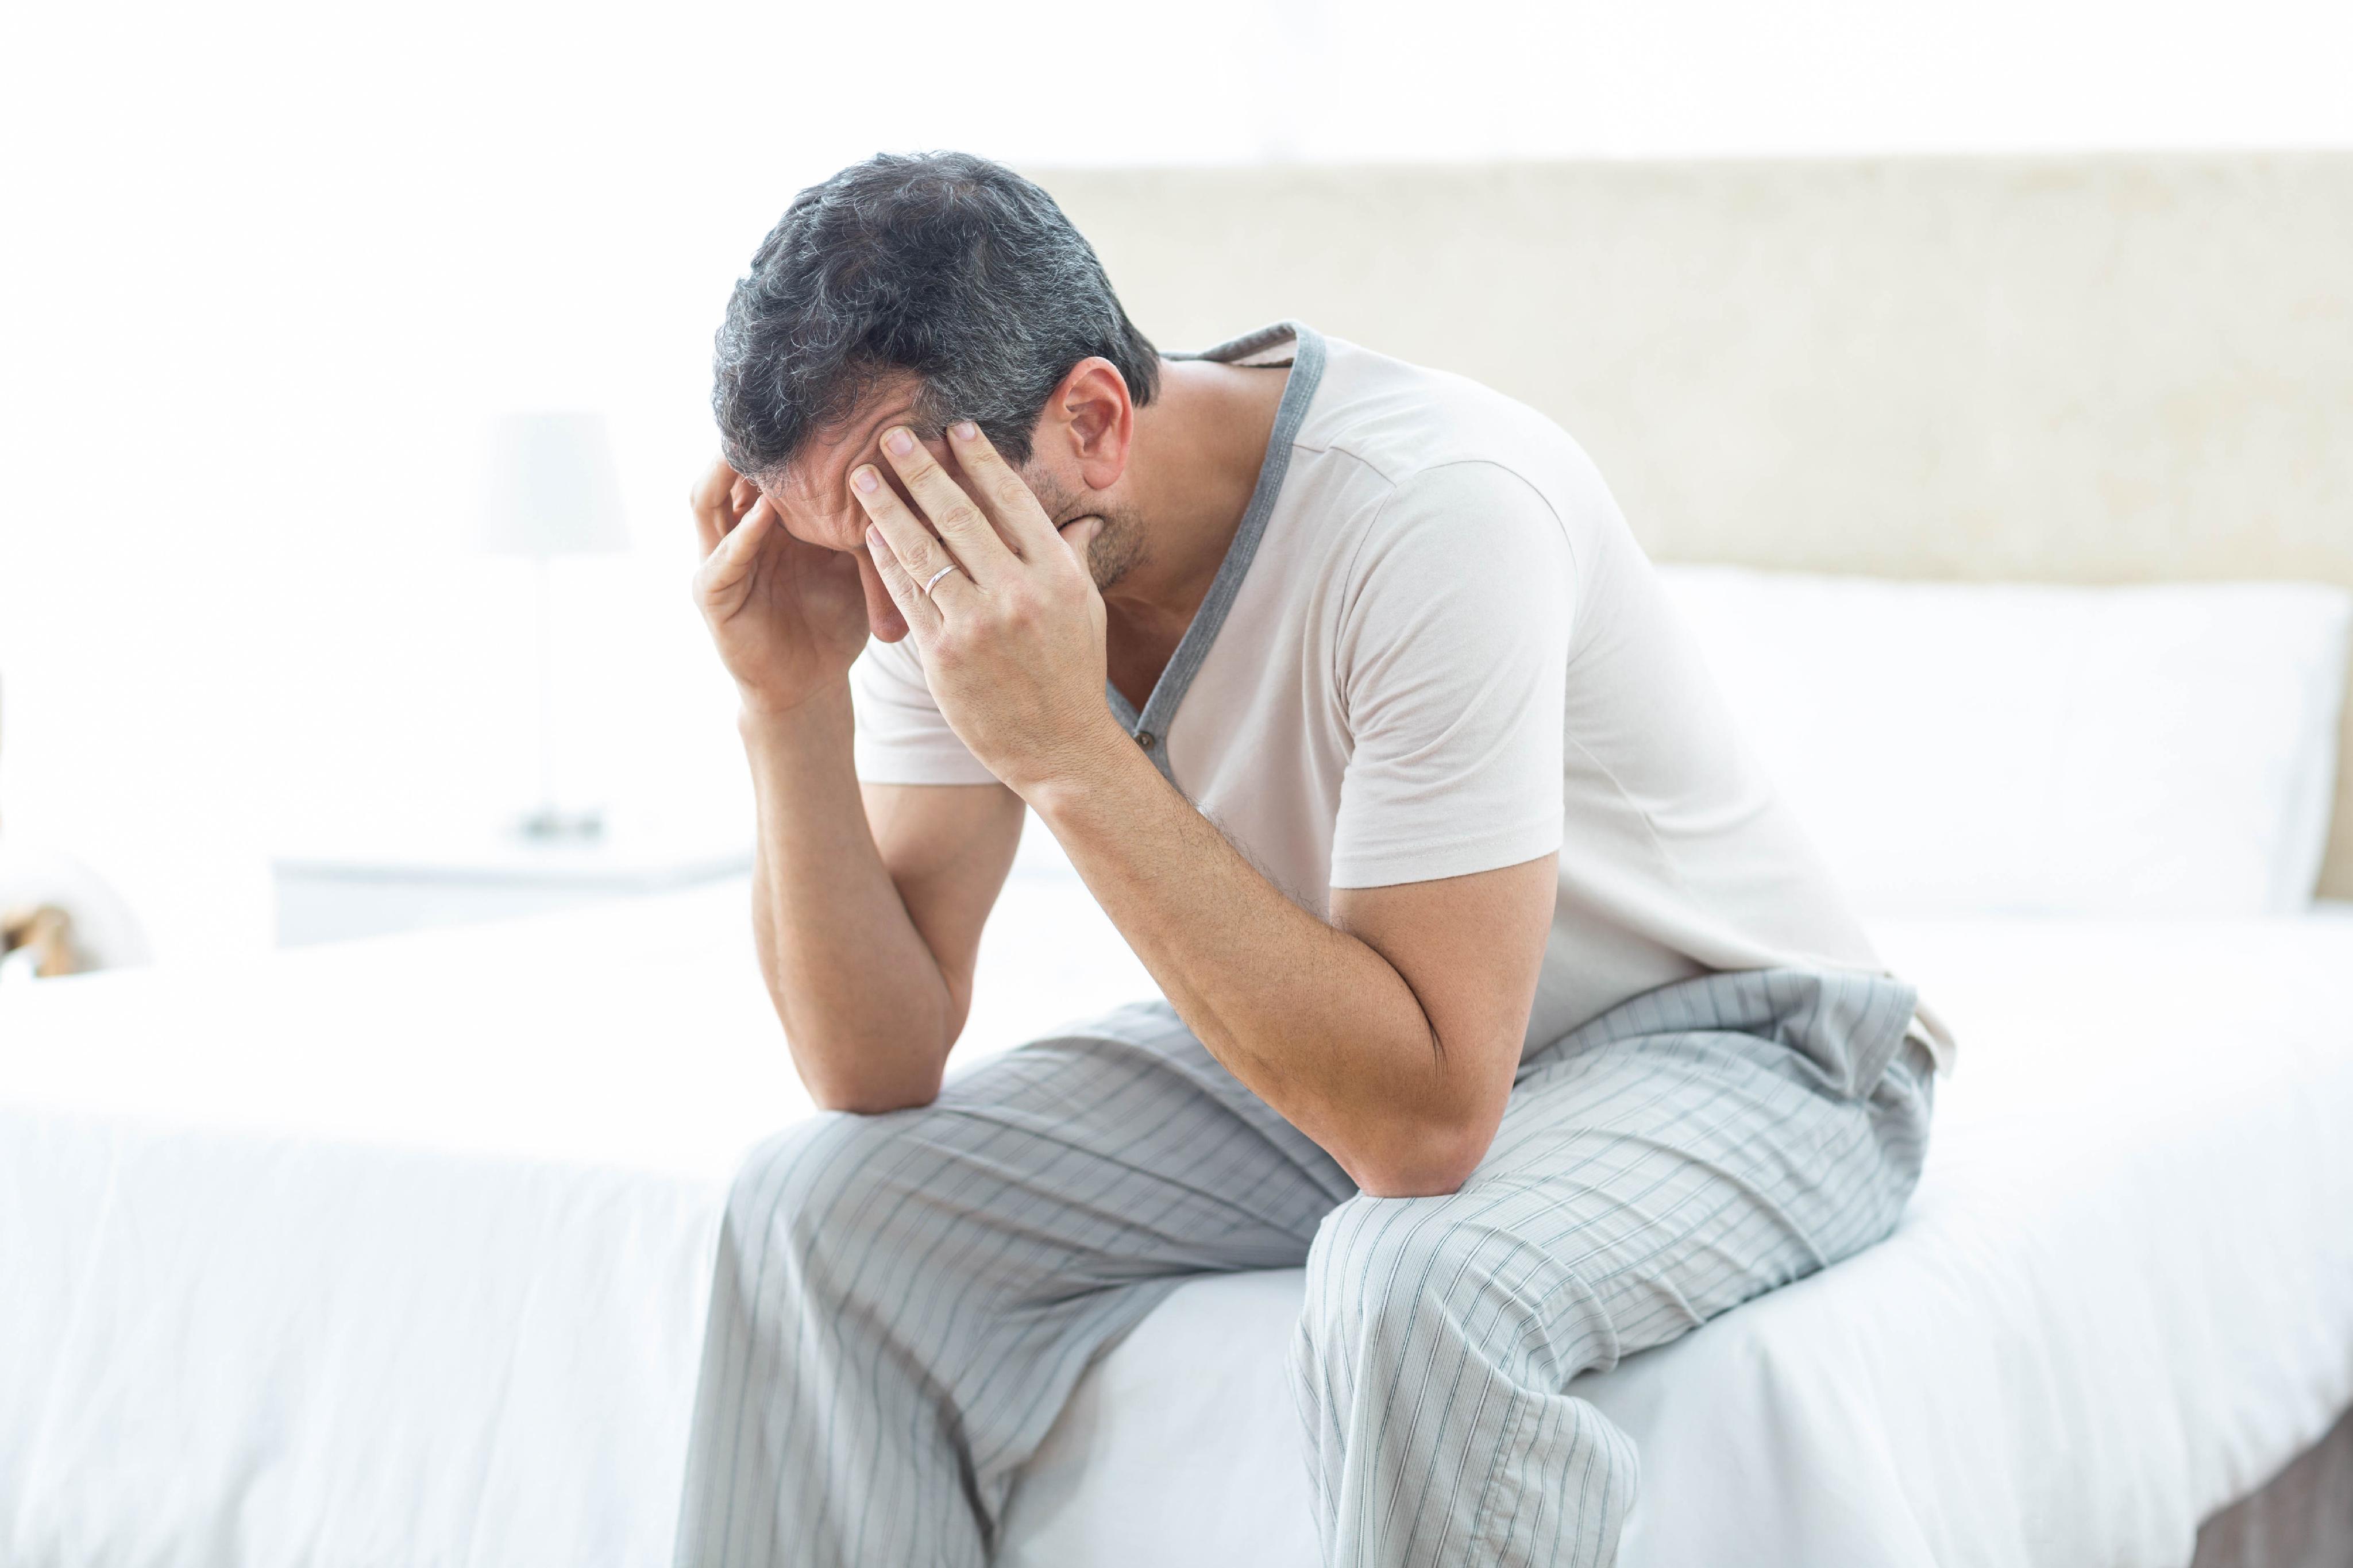 Sleeping Chudachudi Video - Sexual Problems in Men | Erectile Dysfunction | MedlinePlus